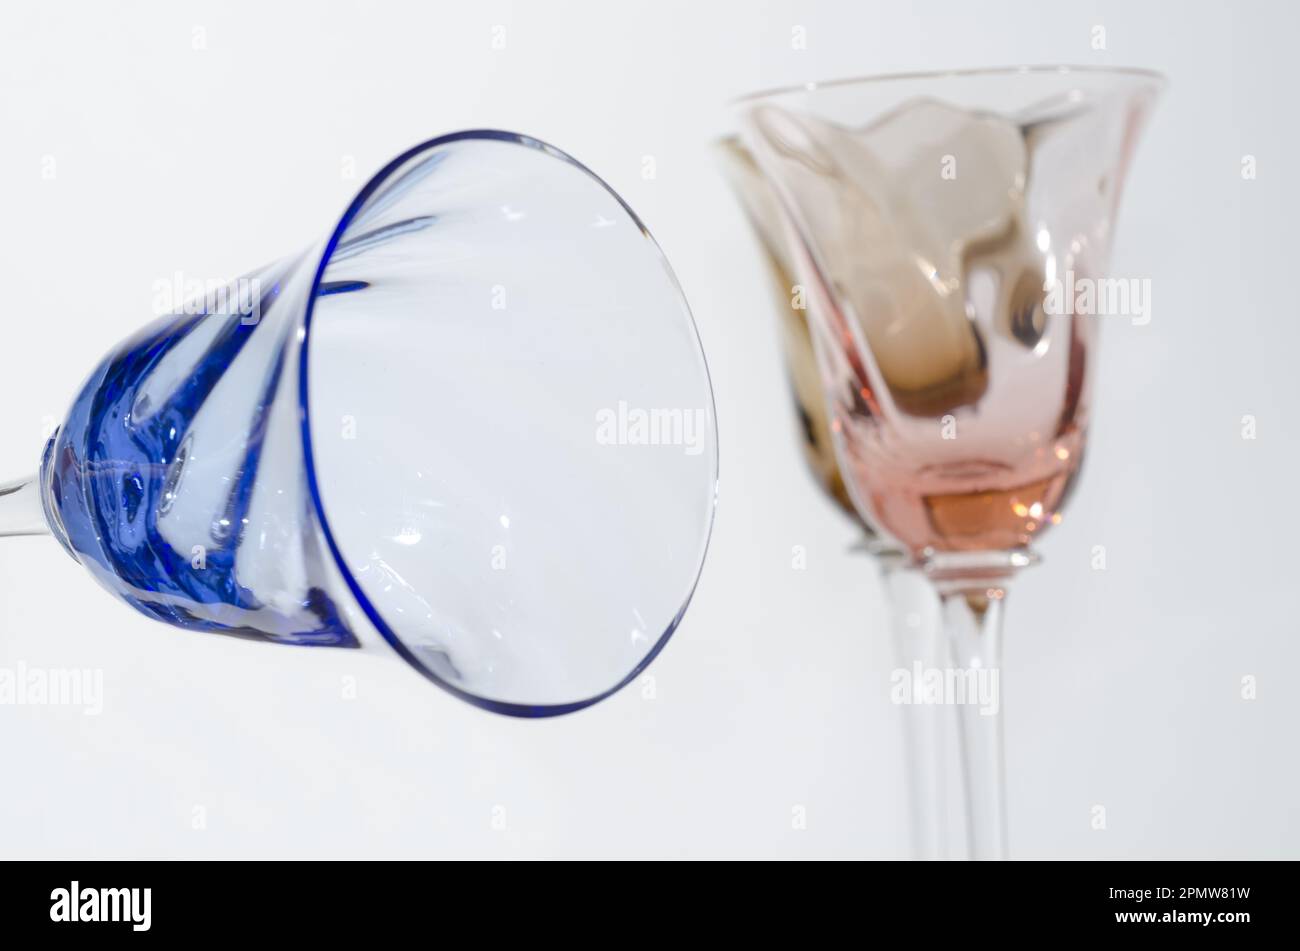 https://c8.alamy.com/comp/2PMW81W/elegant-and-colorful-wine-glasses-2PMW81W.jpg